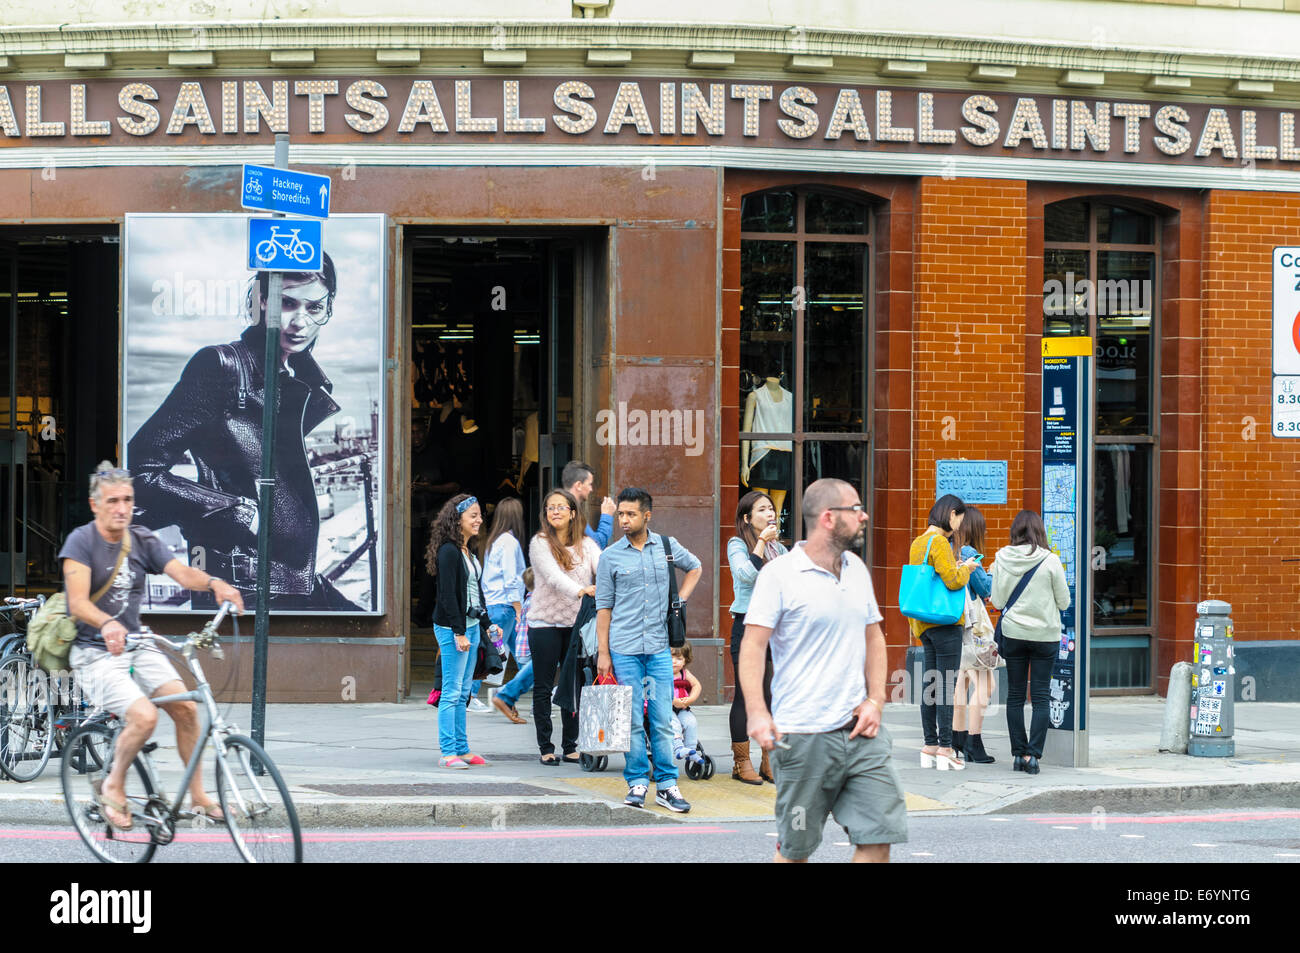 Exterior view of All Saints Clothing shop, Spitafields, London, UK Stock Photo